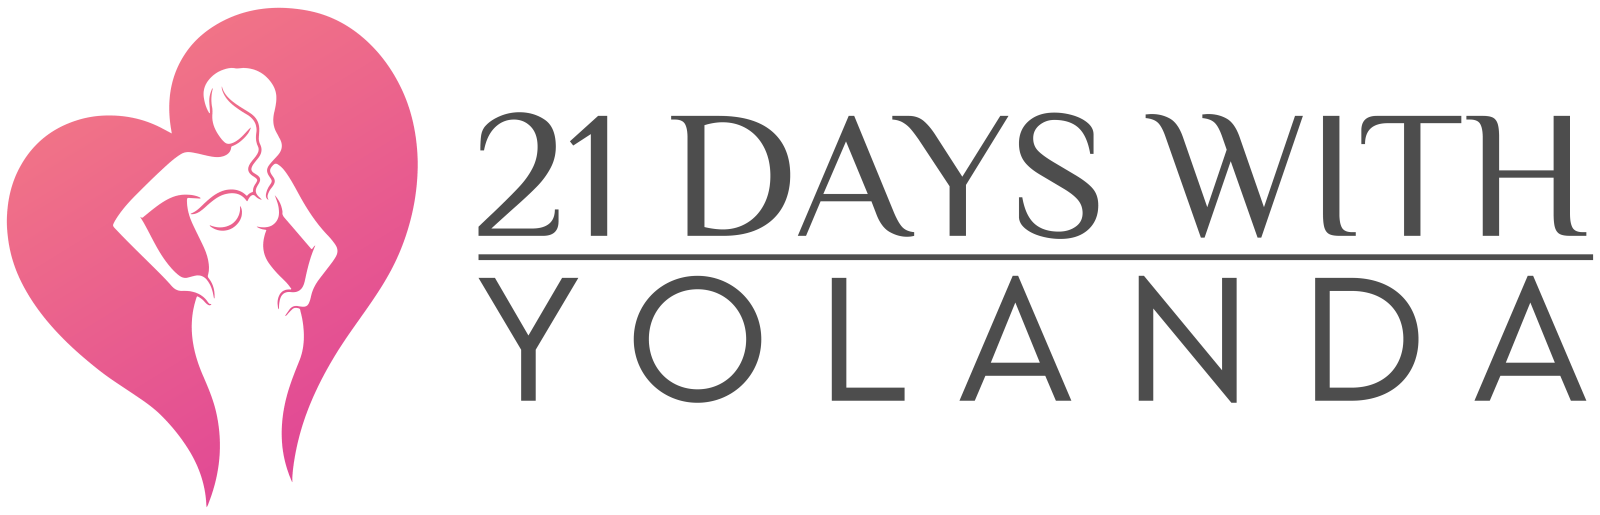 21 Days with Yolanda